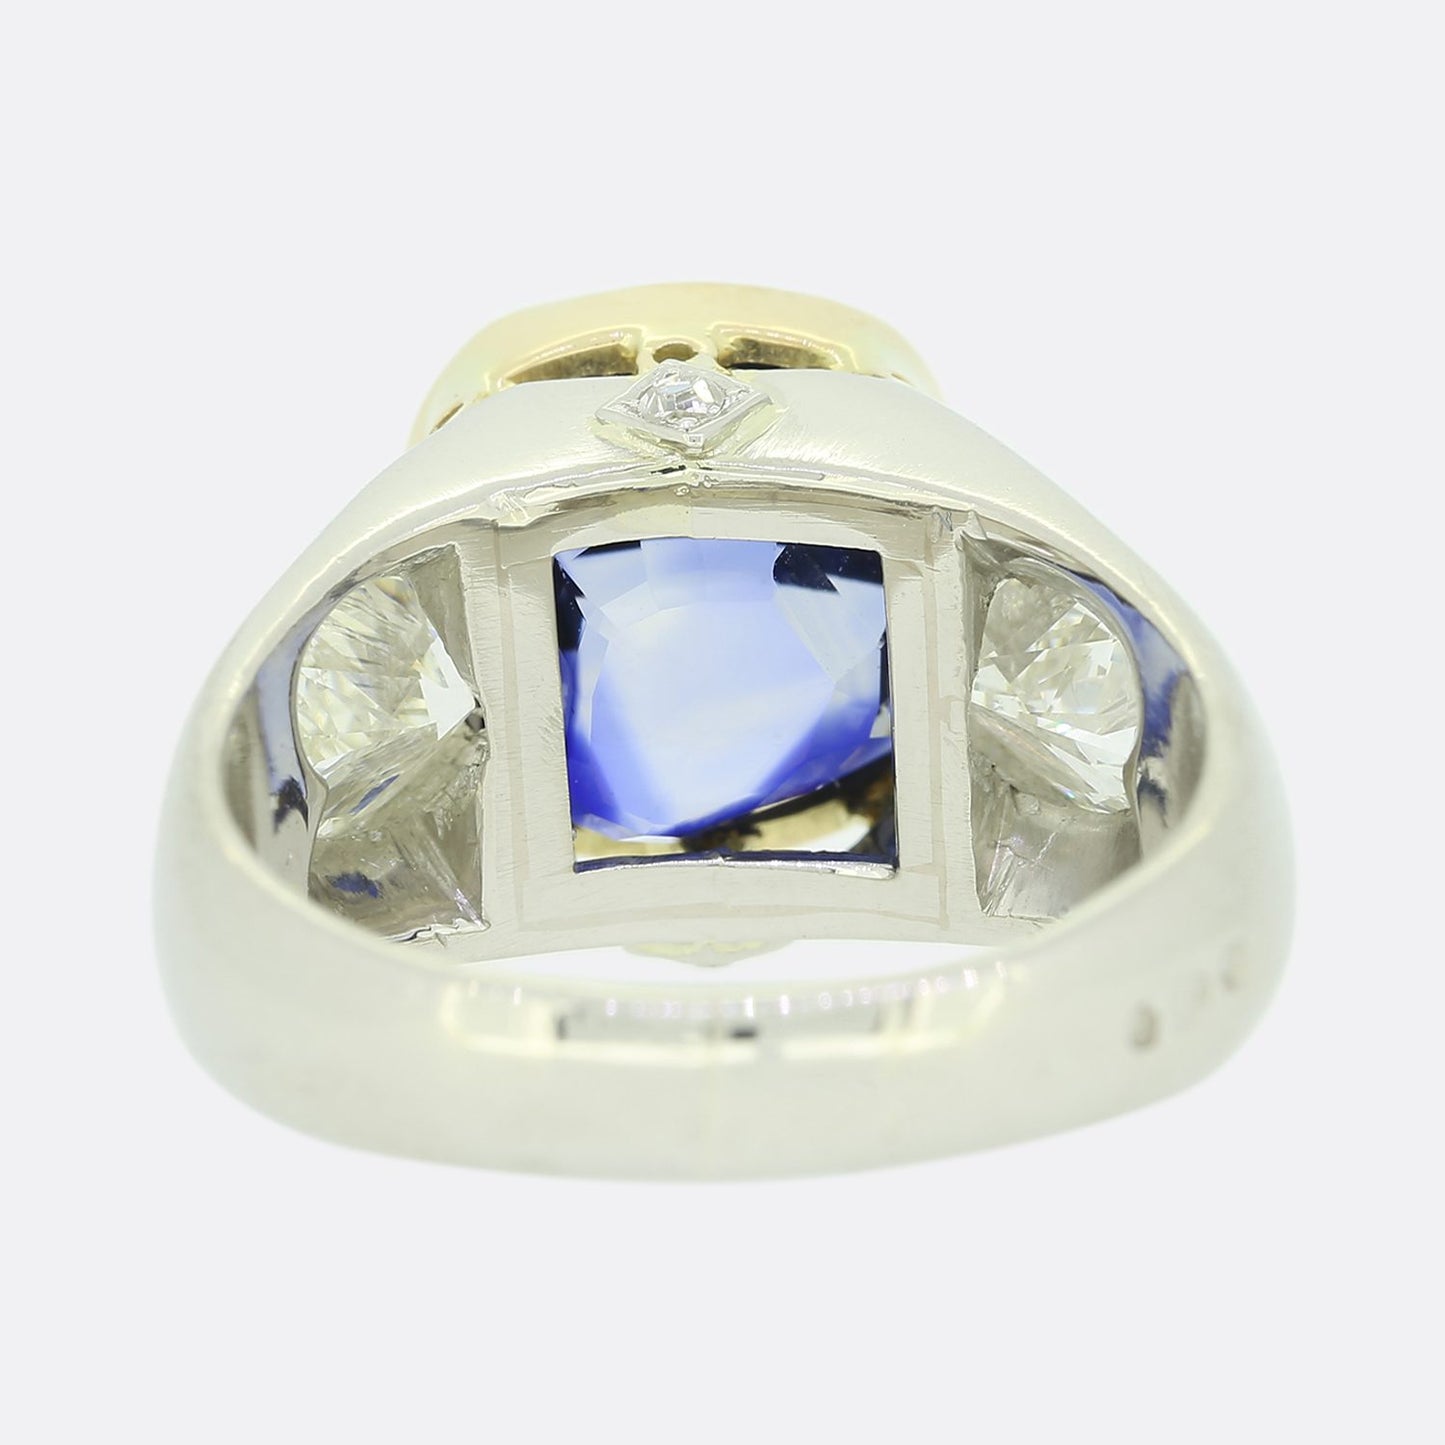 Vintage 8.46 Carat Unheated Ceylon Sapphire and Diamond Ring